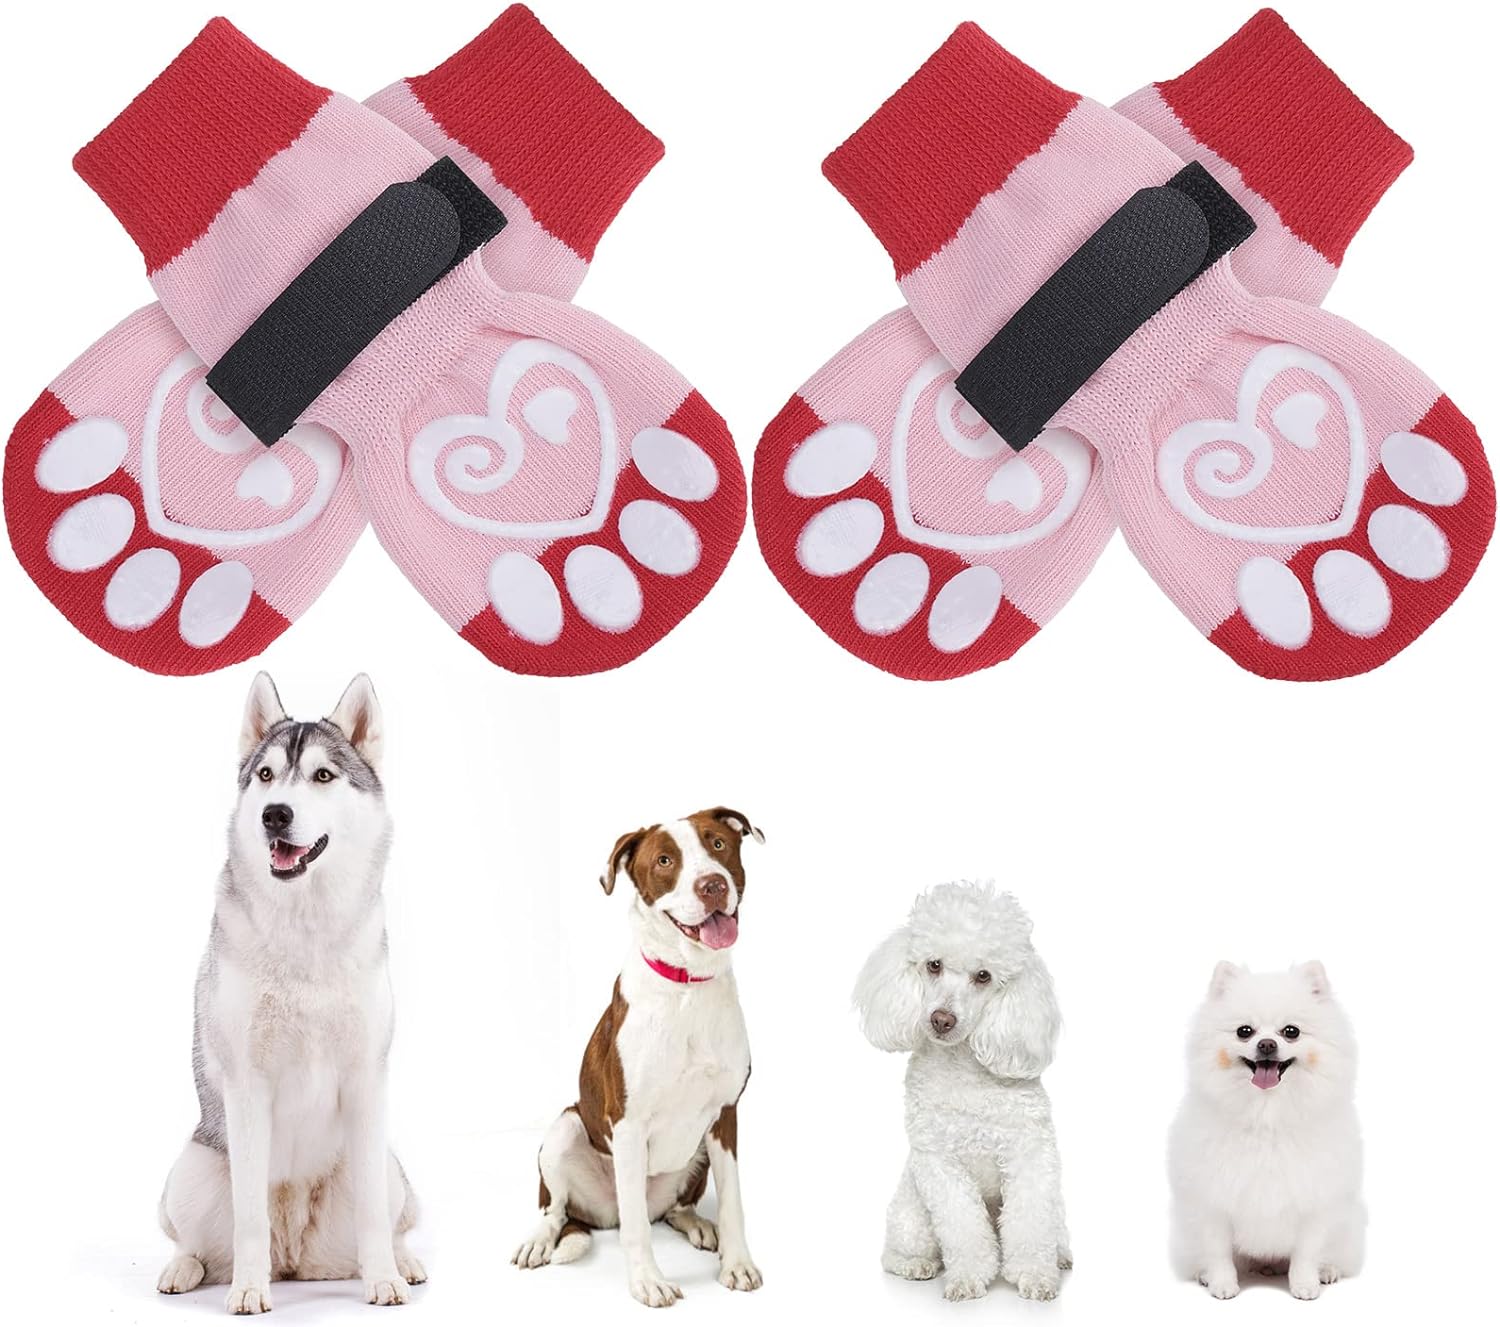 Flash Sale Alert! KOOLTAIL Dog Socks - 2 Pairs - Save 20% Today!